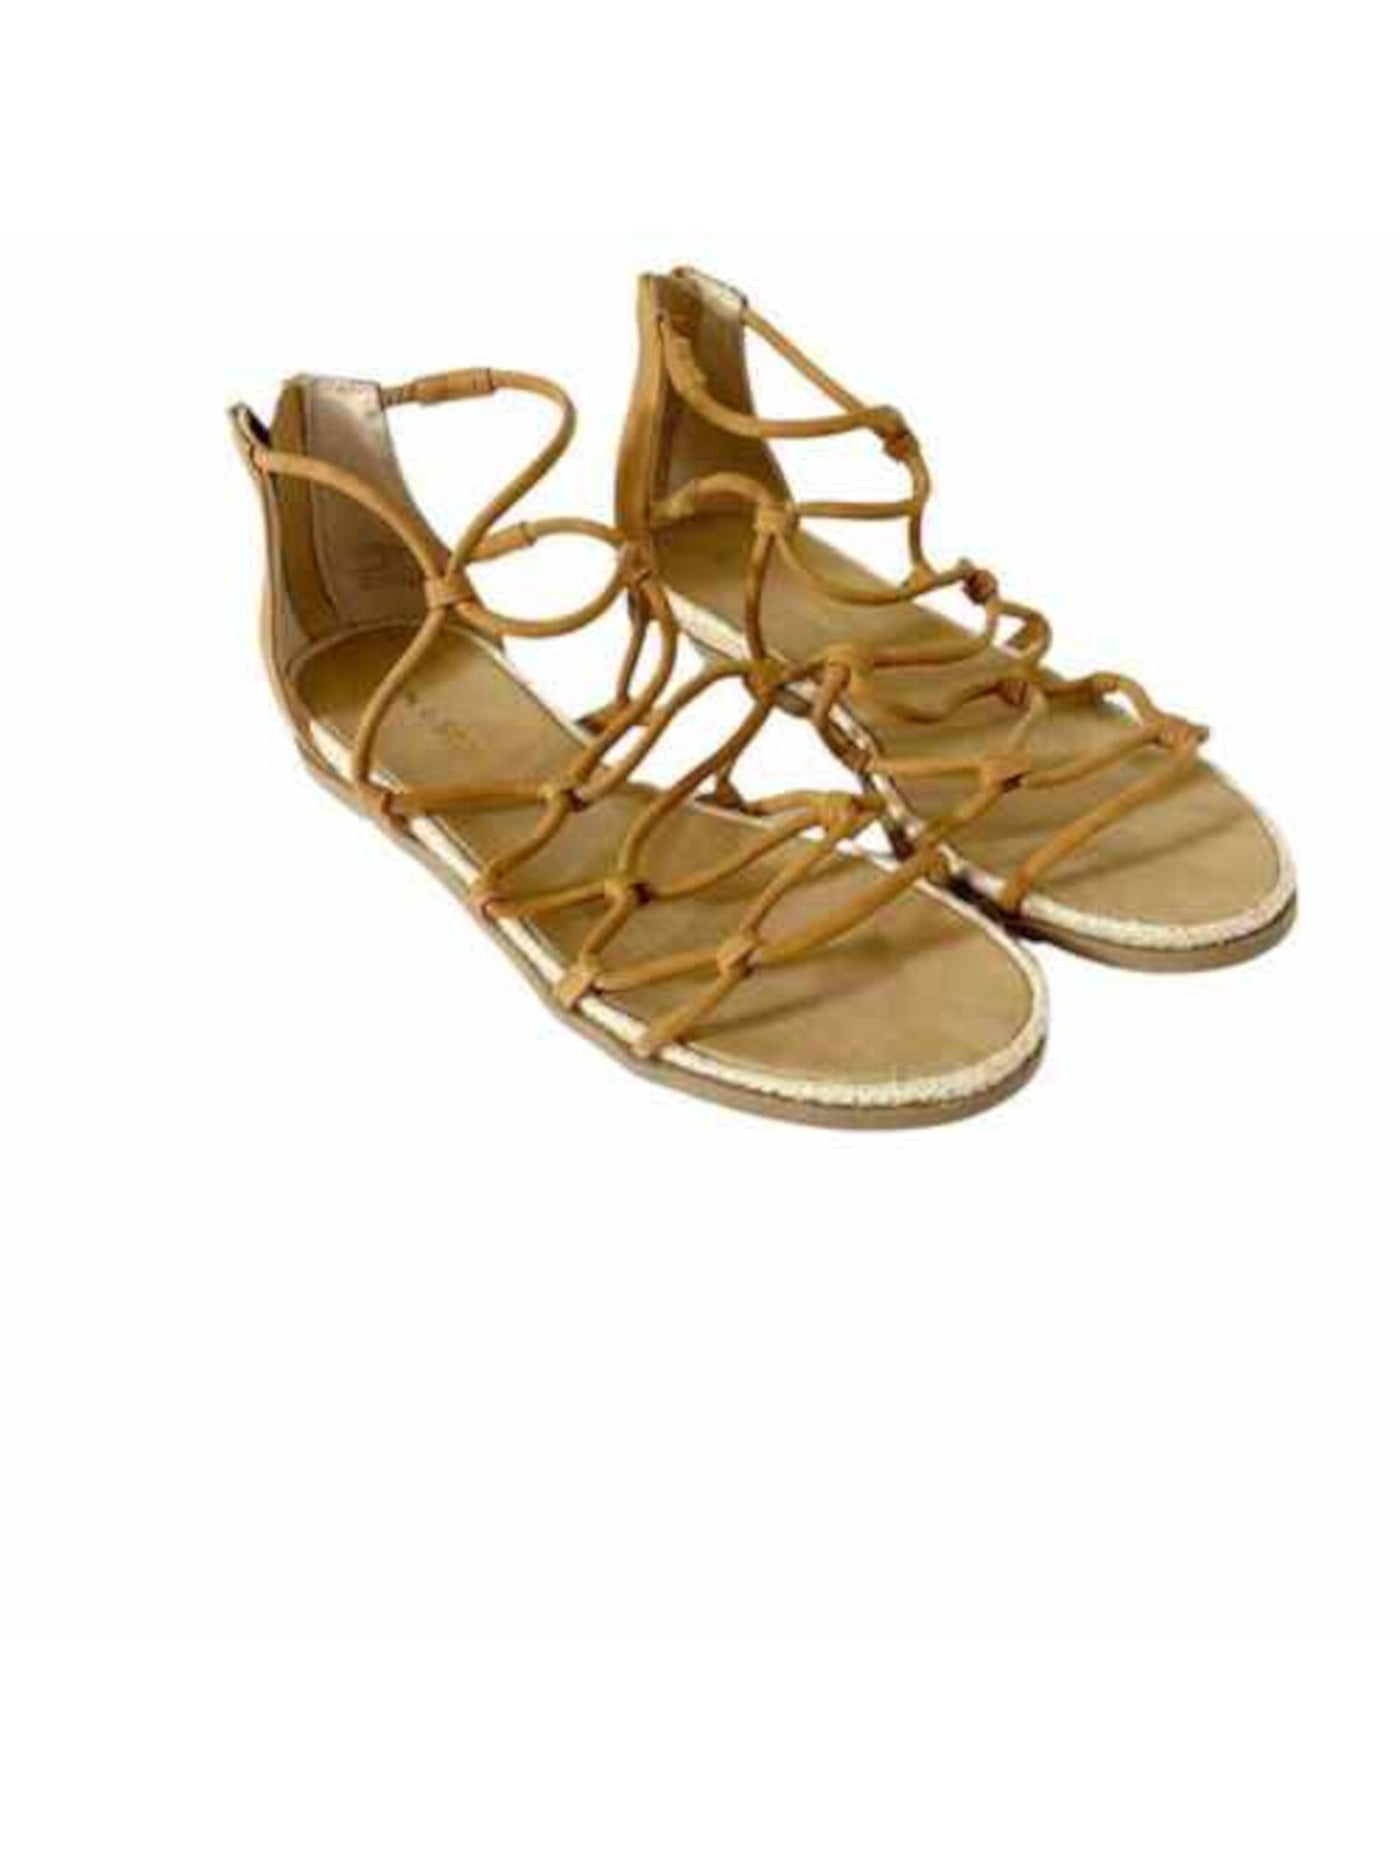 SUN STONE Womens Brown Snakeskin 0.5" Platform Espadrille Padded Strappy Oliviah Round Toe Platform Zip-Up Gladiator Sandals Shoes 7.5 M